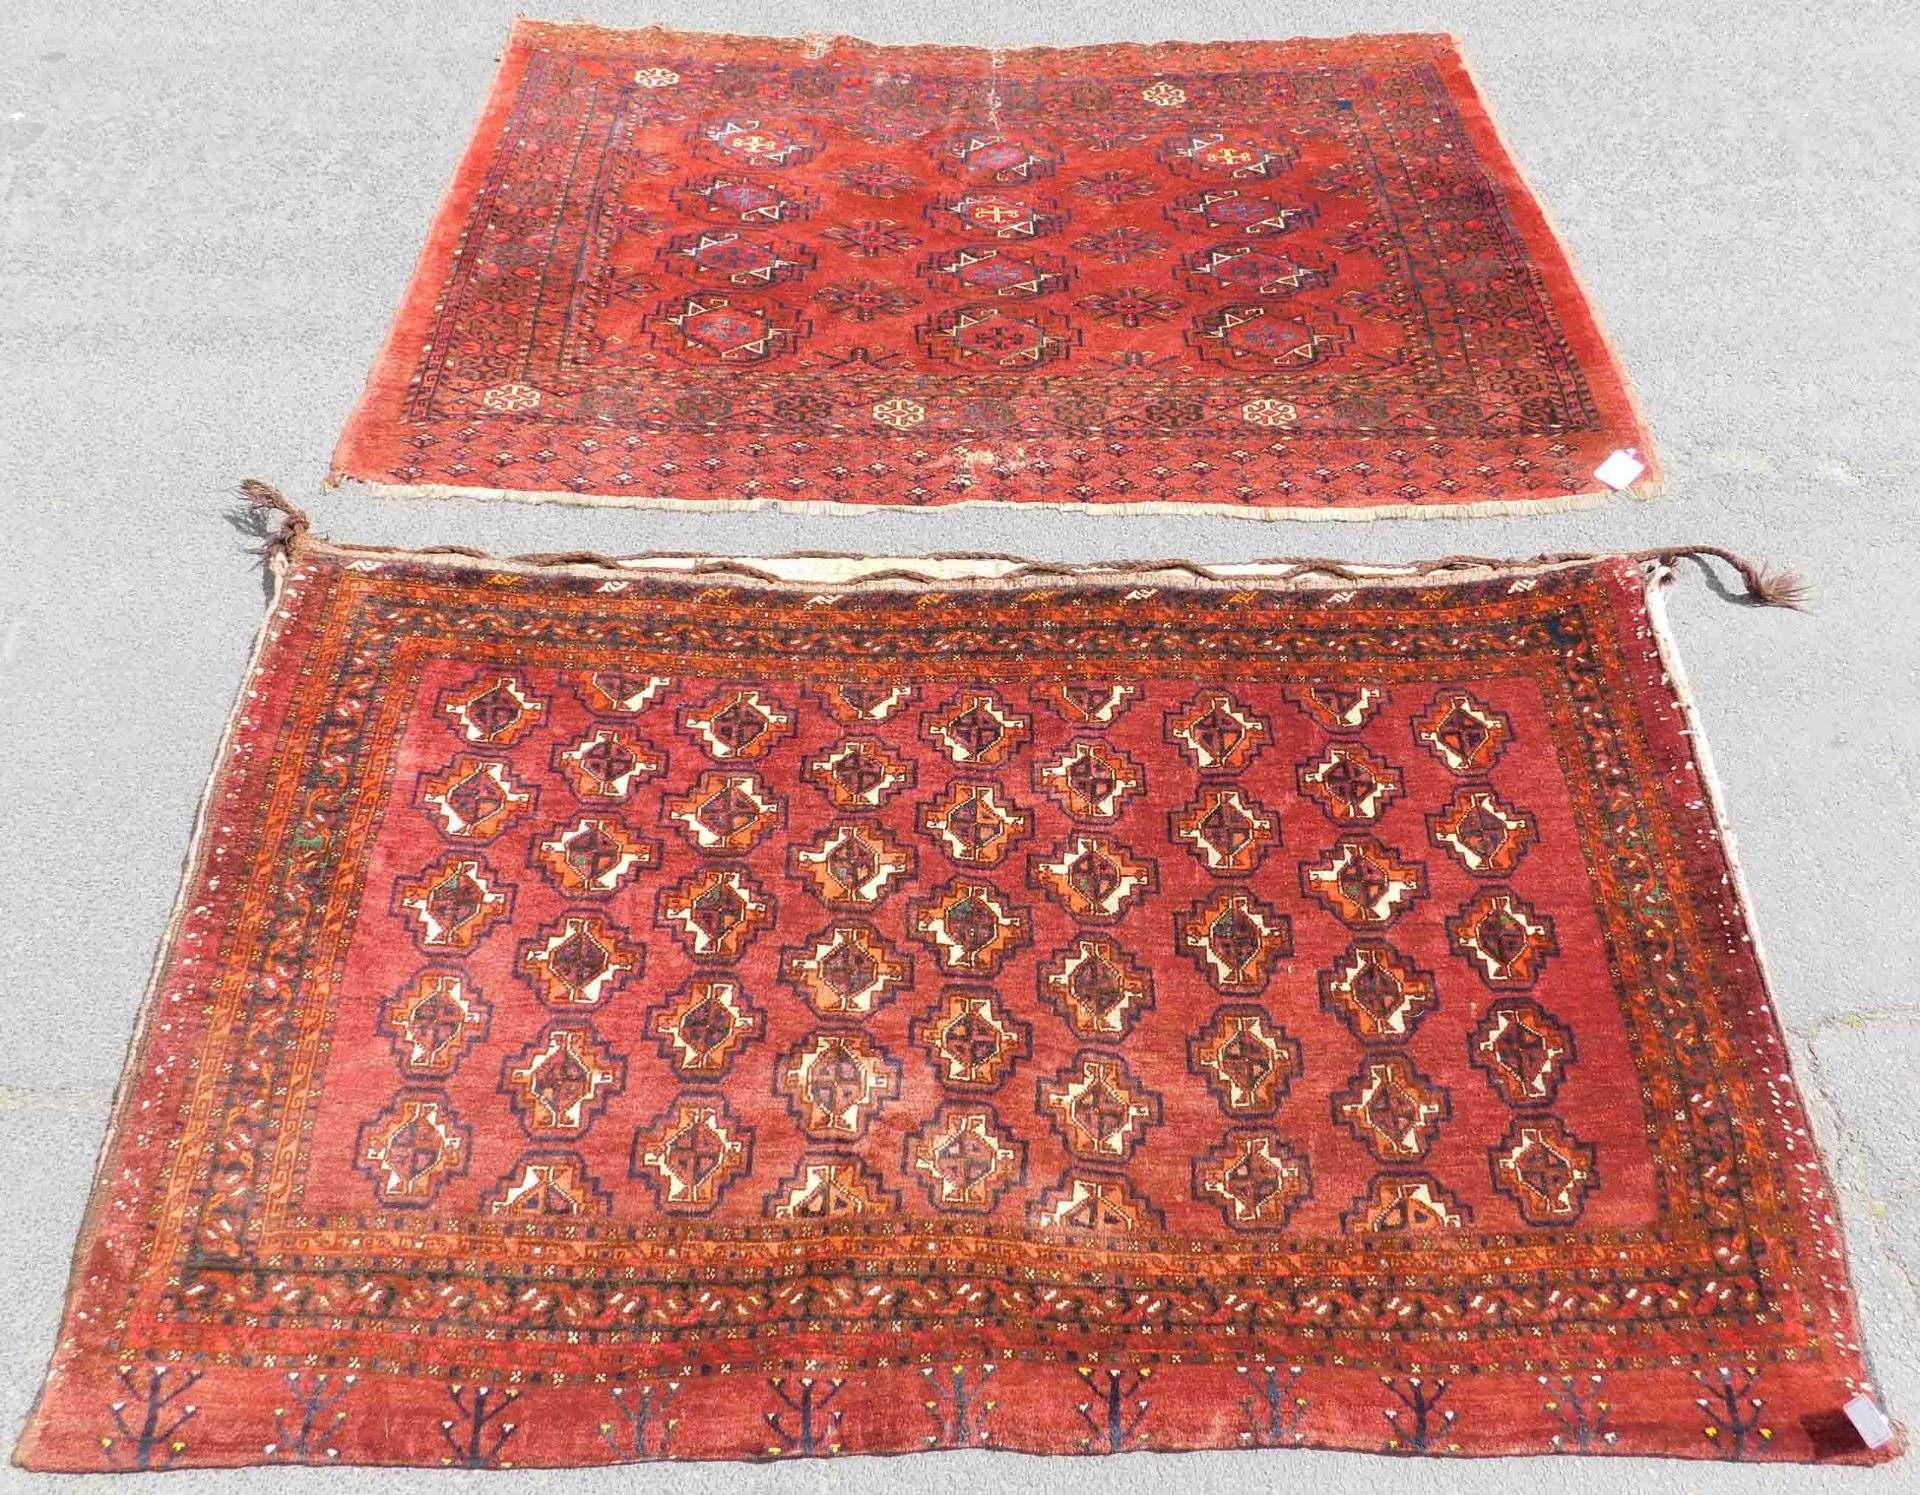 2 Ersari Turkmen Tschowal. Turkmenistan.Approx. 108 cm x 179 cm each. Tribal rugs.One with a tree